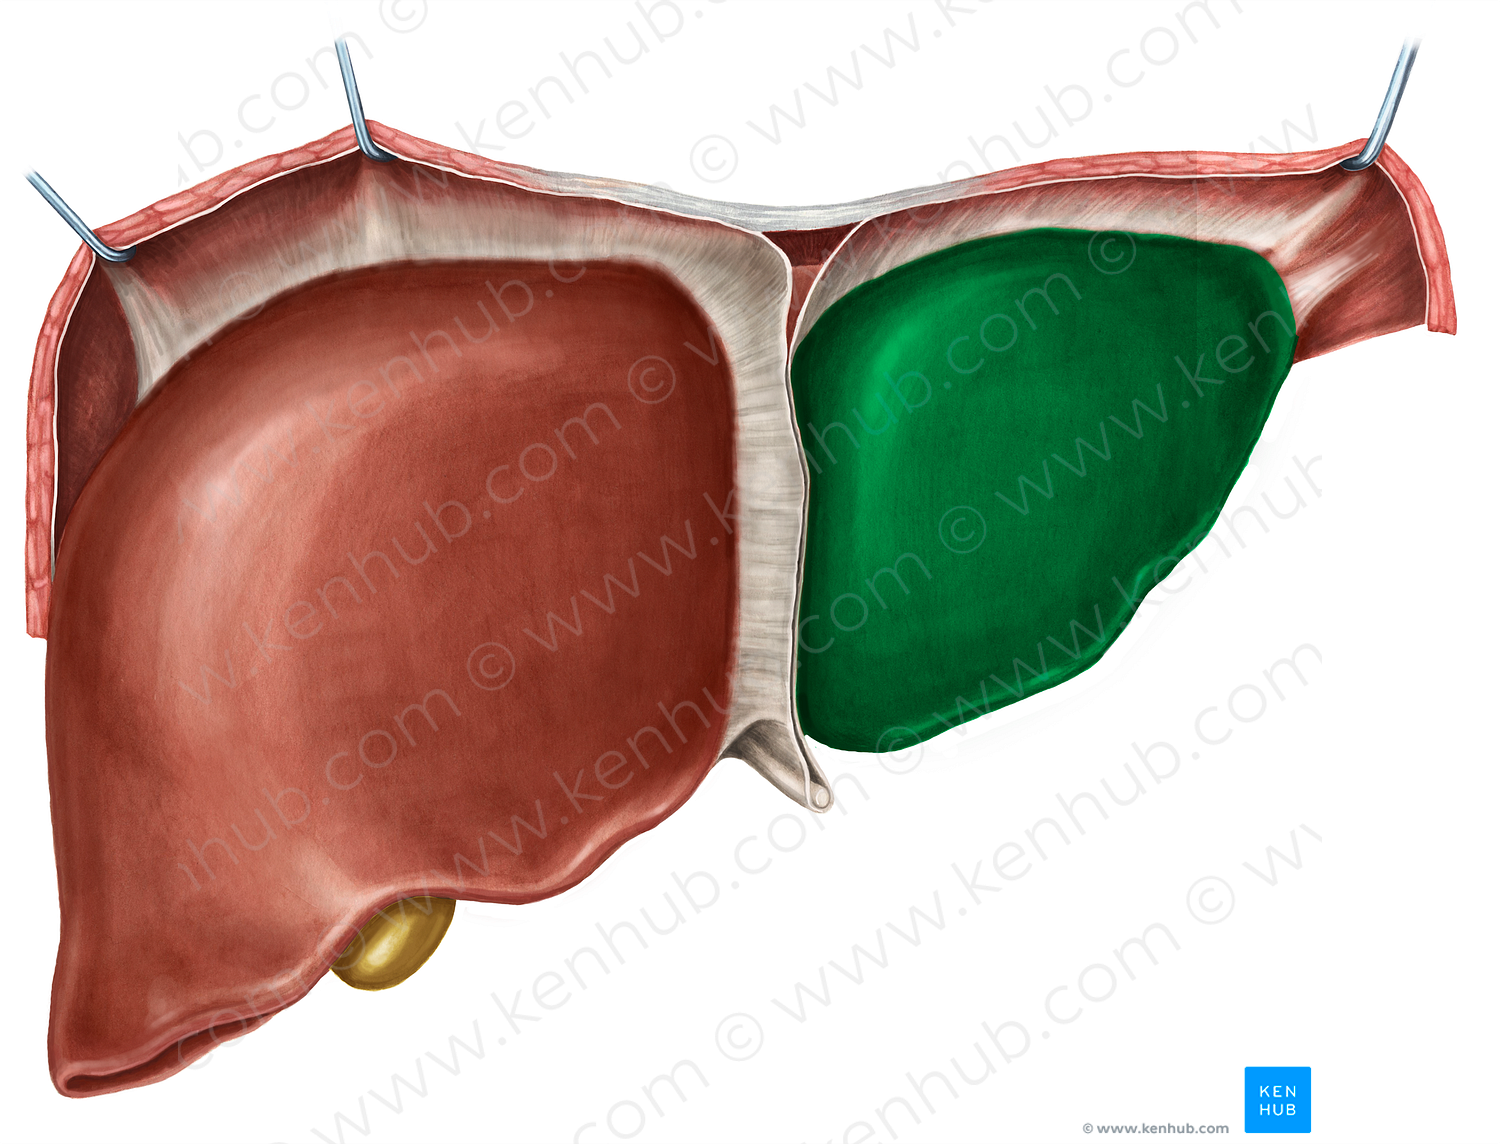 Left lobe of liver (#4802)